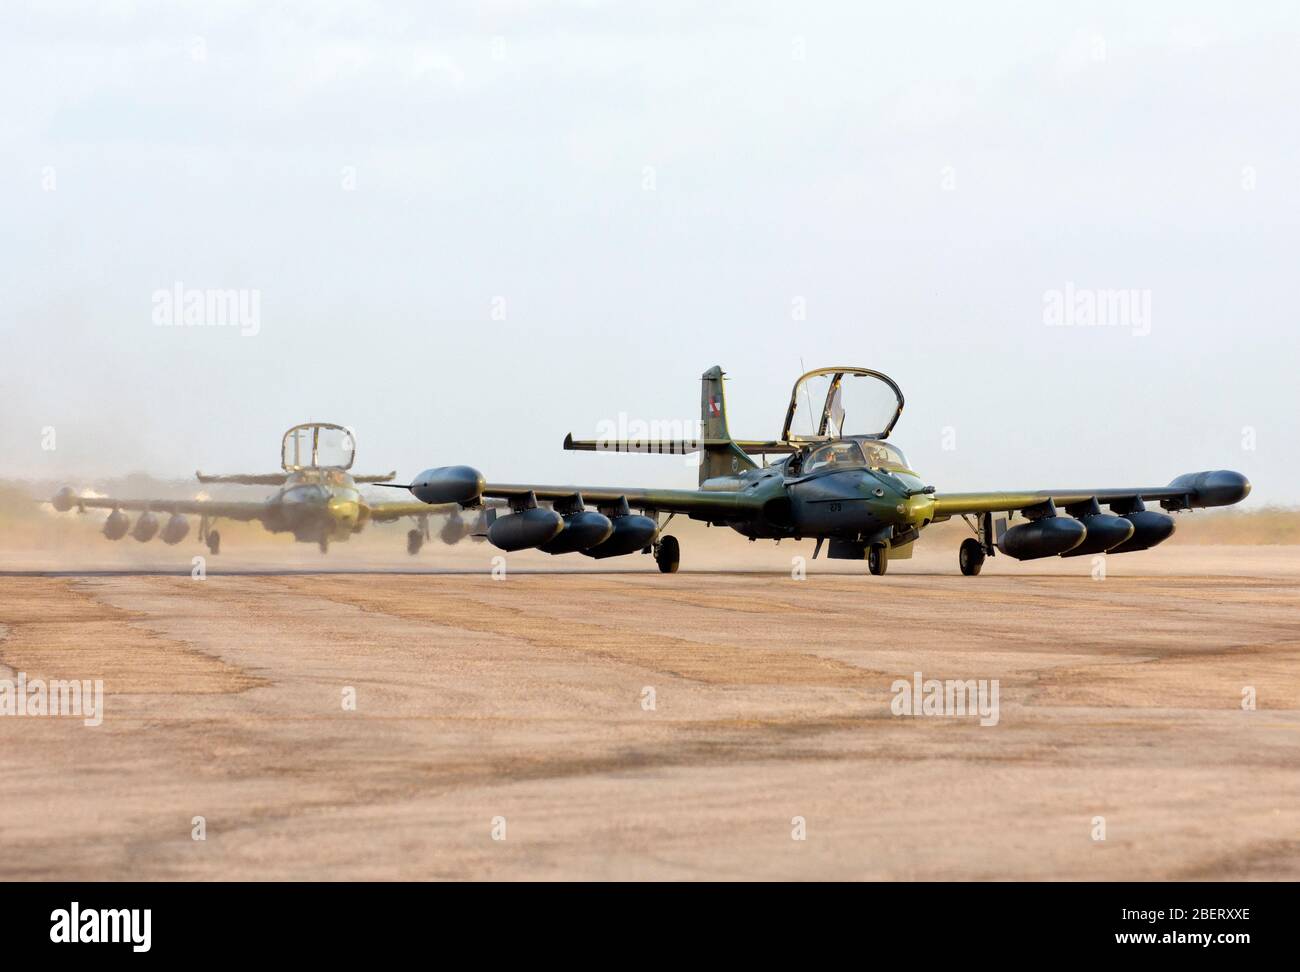 Uruguayan Air Force A-37 attack aircraft. Stock Photo